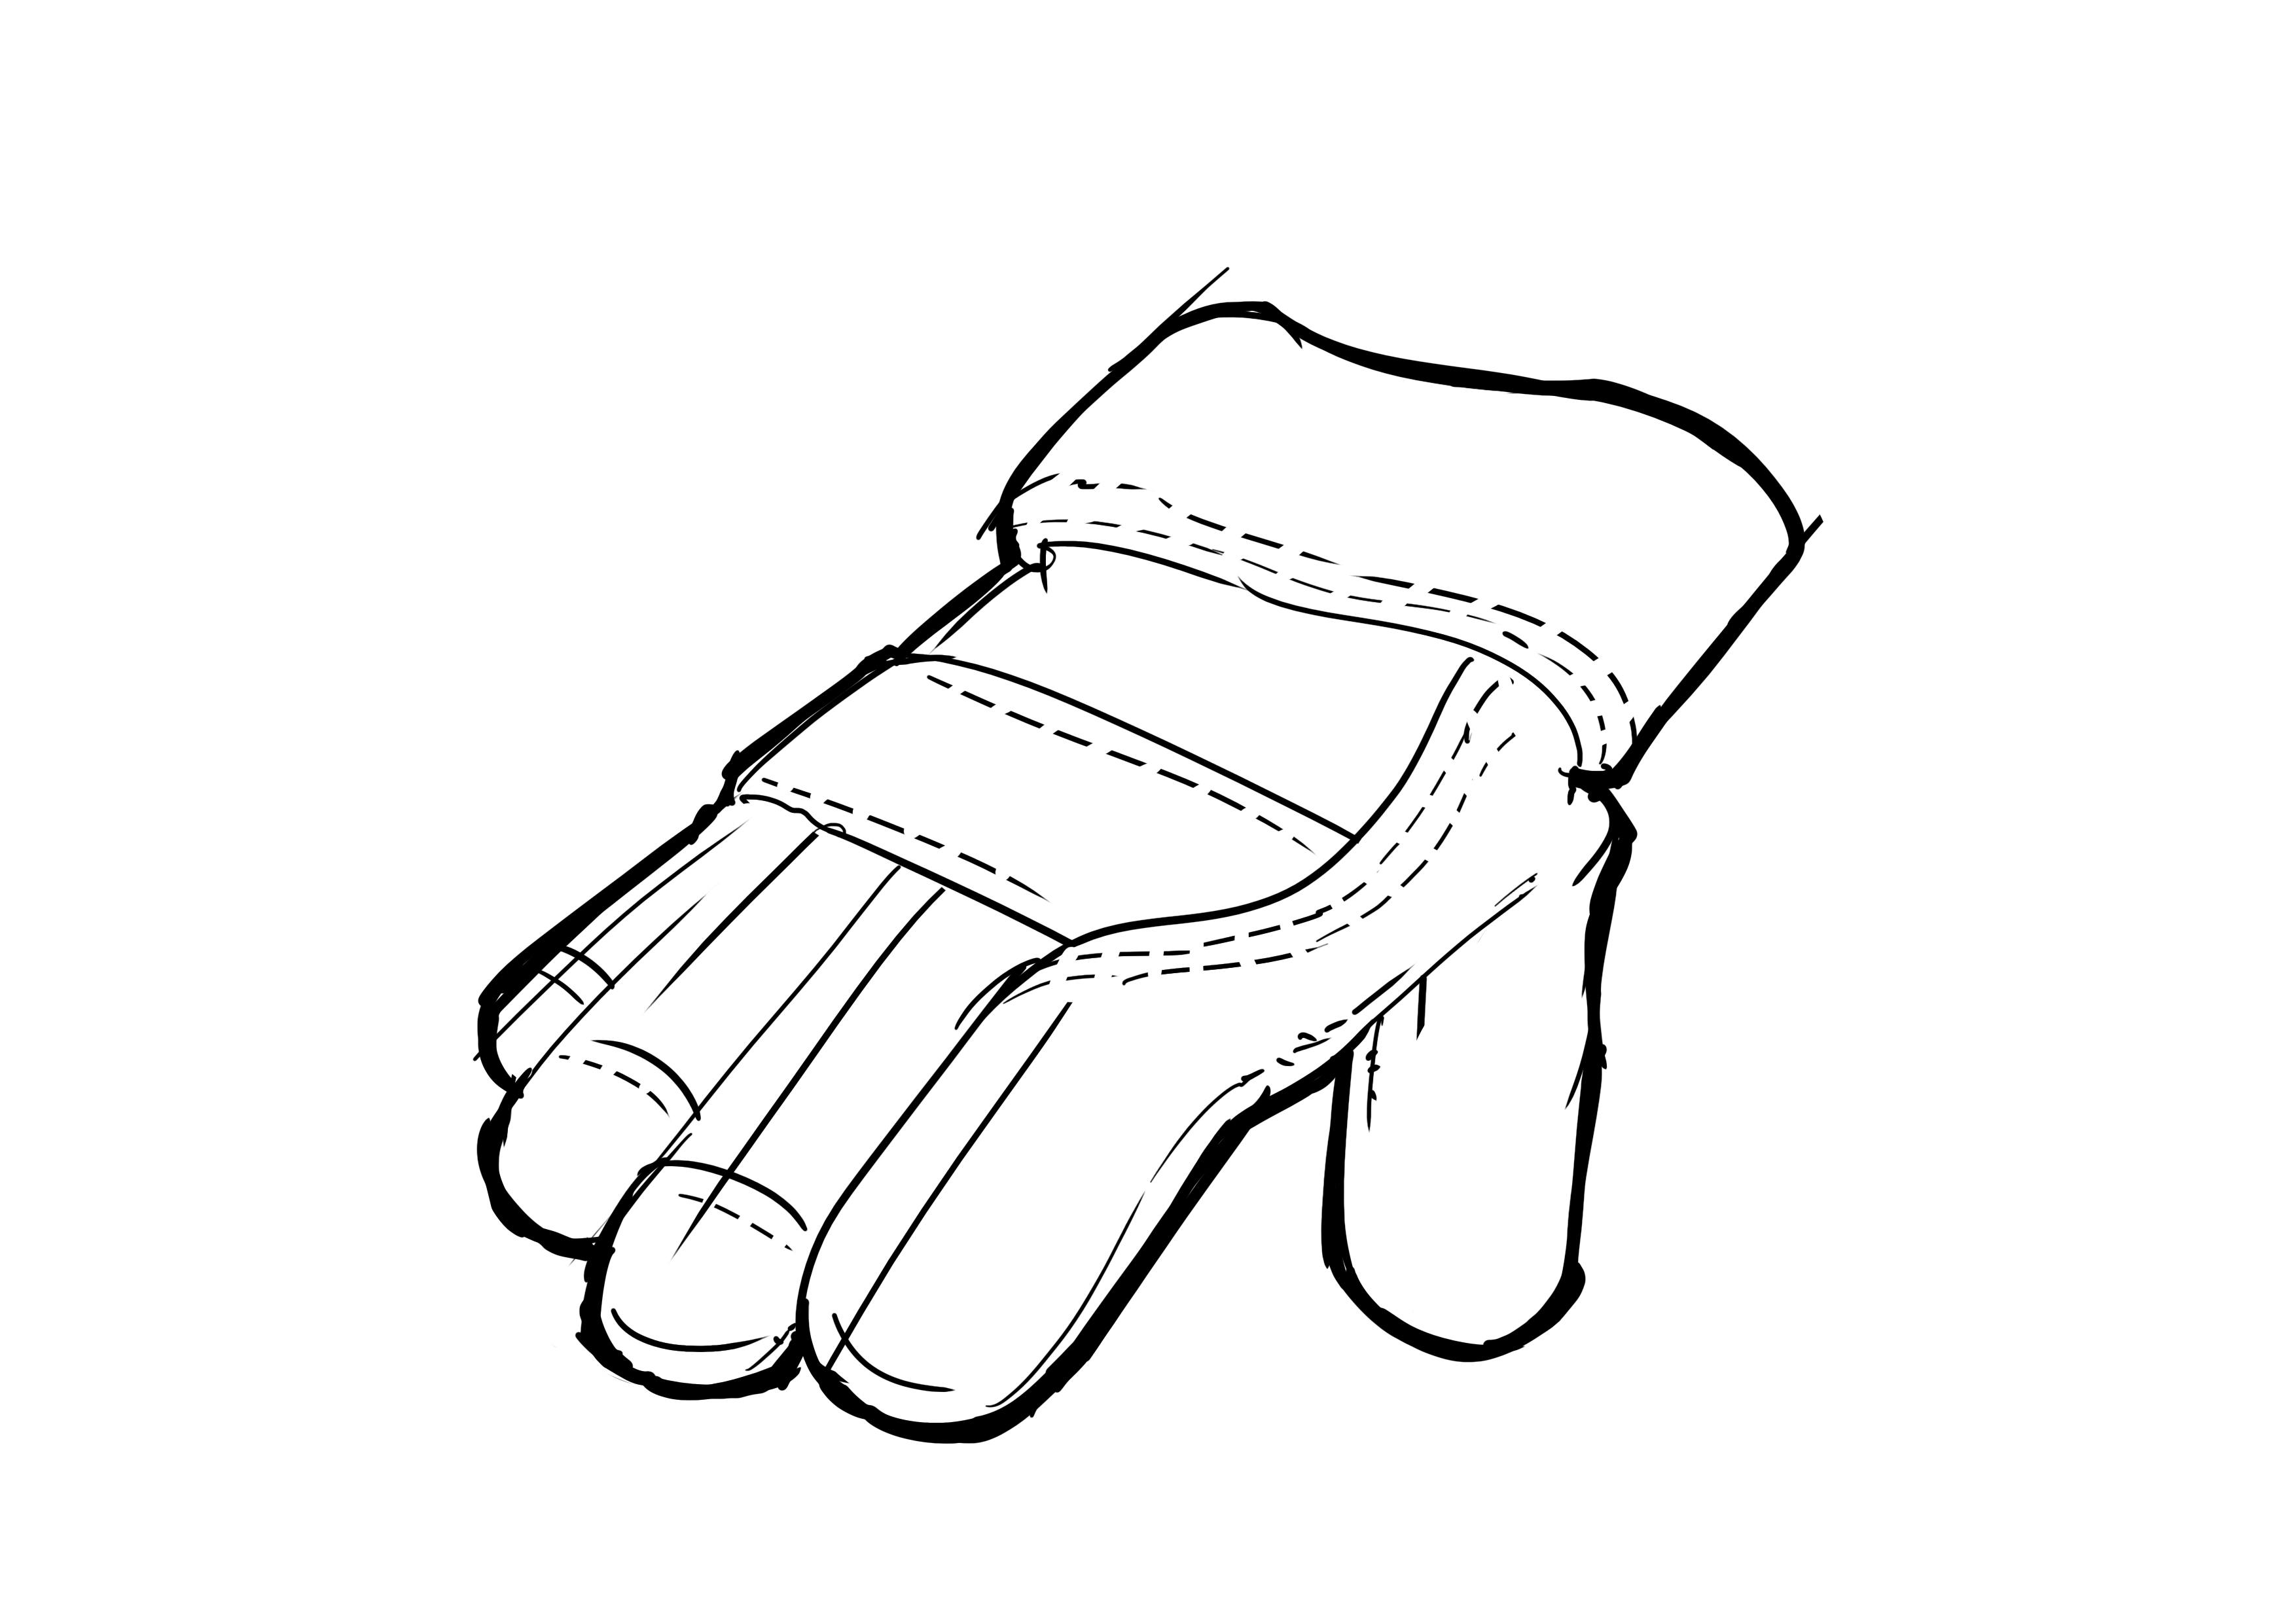 Glove sketch - large